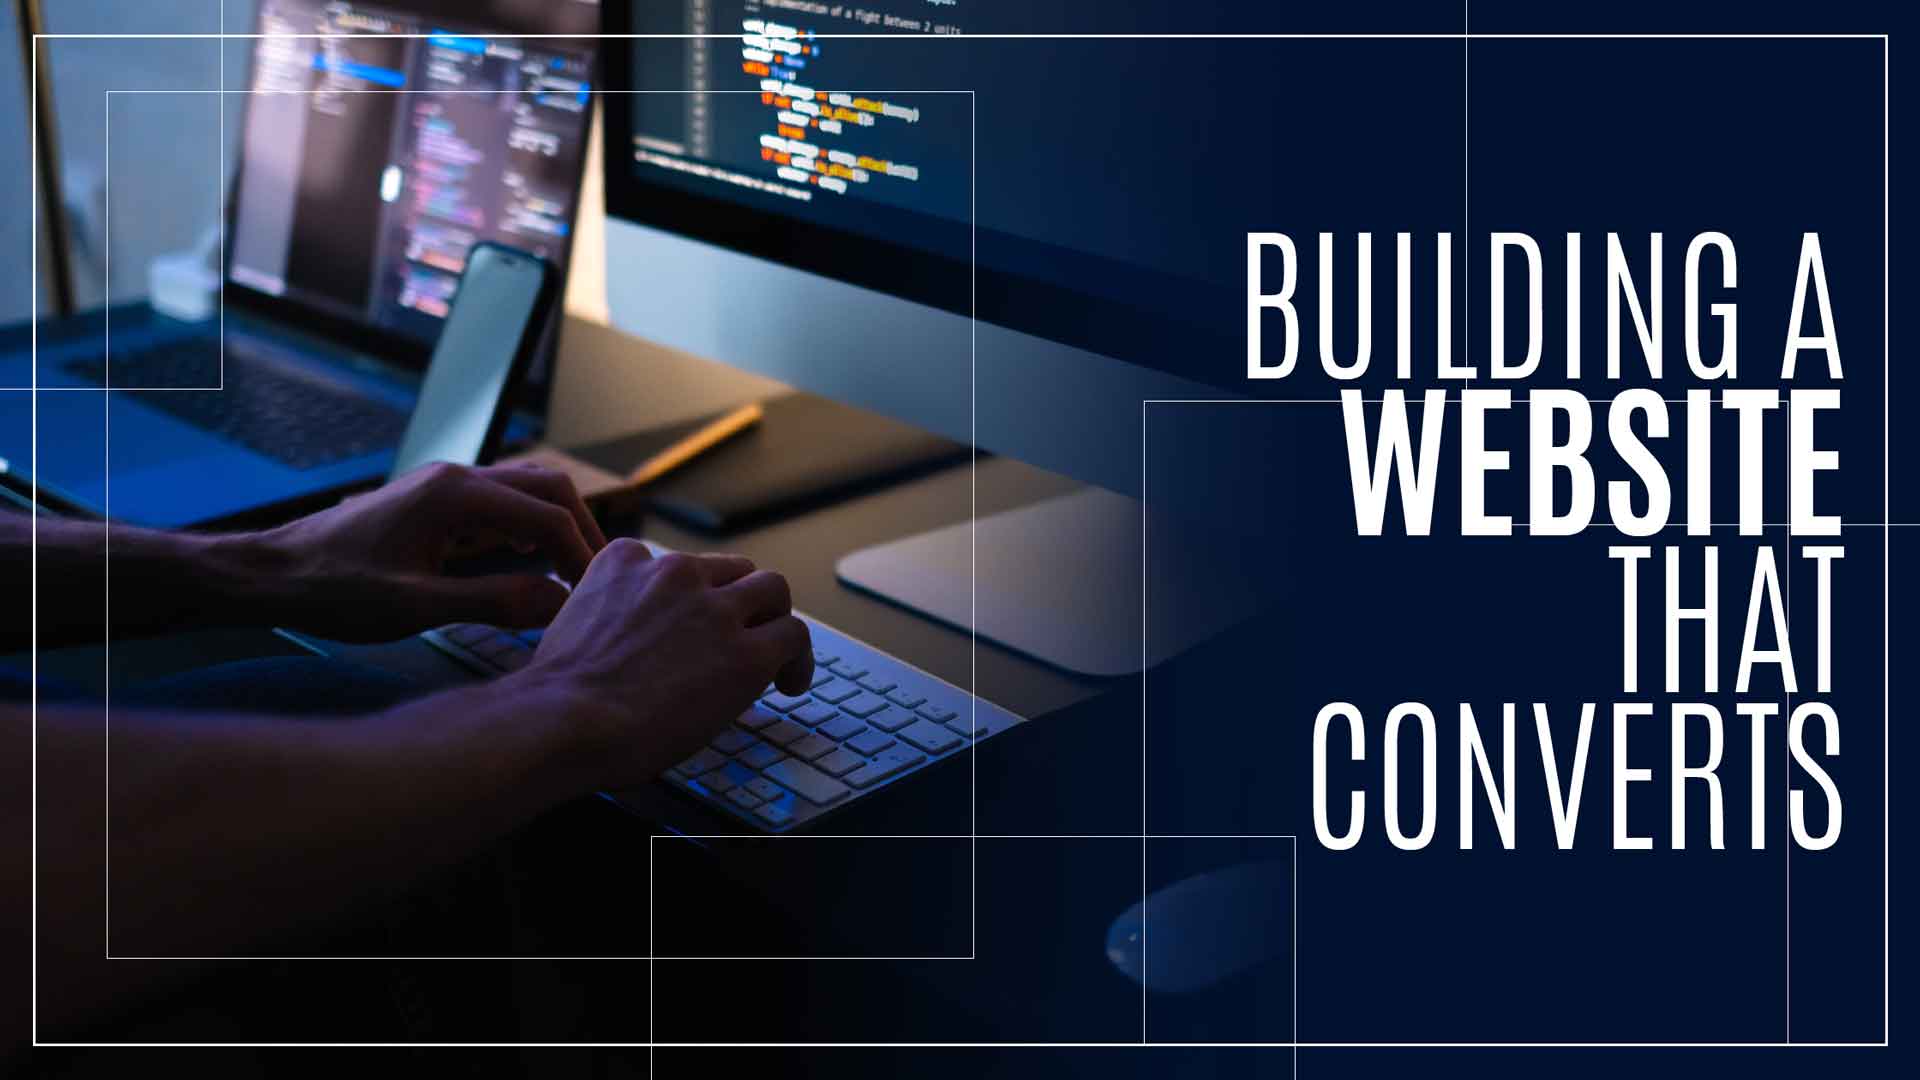 Building a website that converts